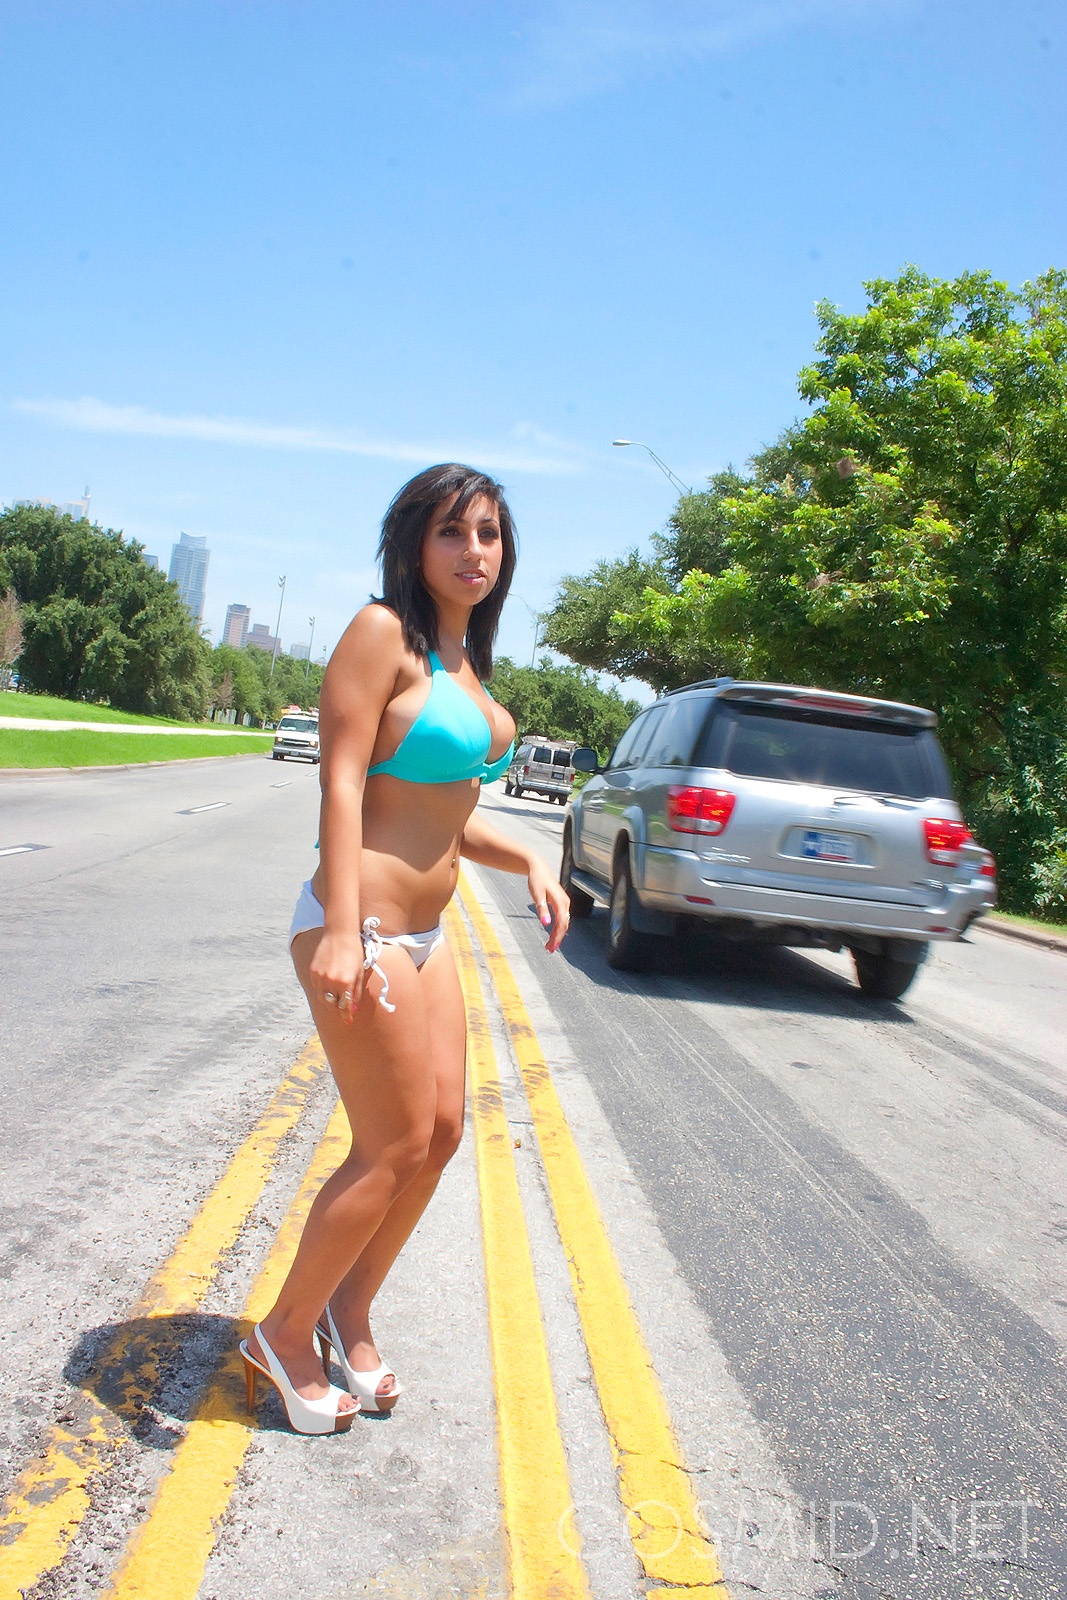 wpid-daring-curvaceous-hottie-shami-halil-playing-in-her-bikini-in-the-street14.jpg